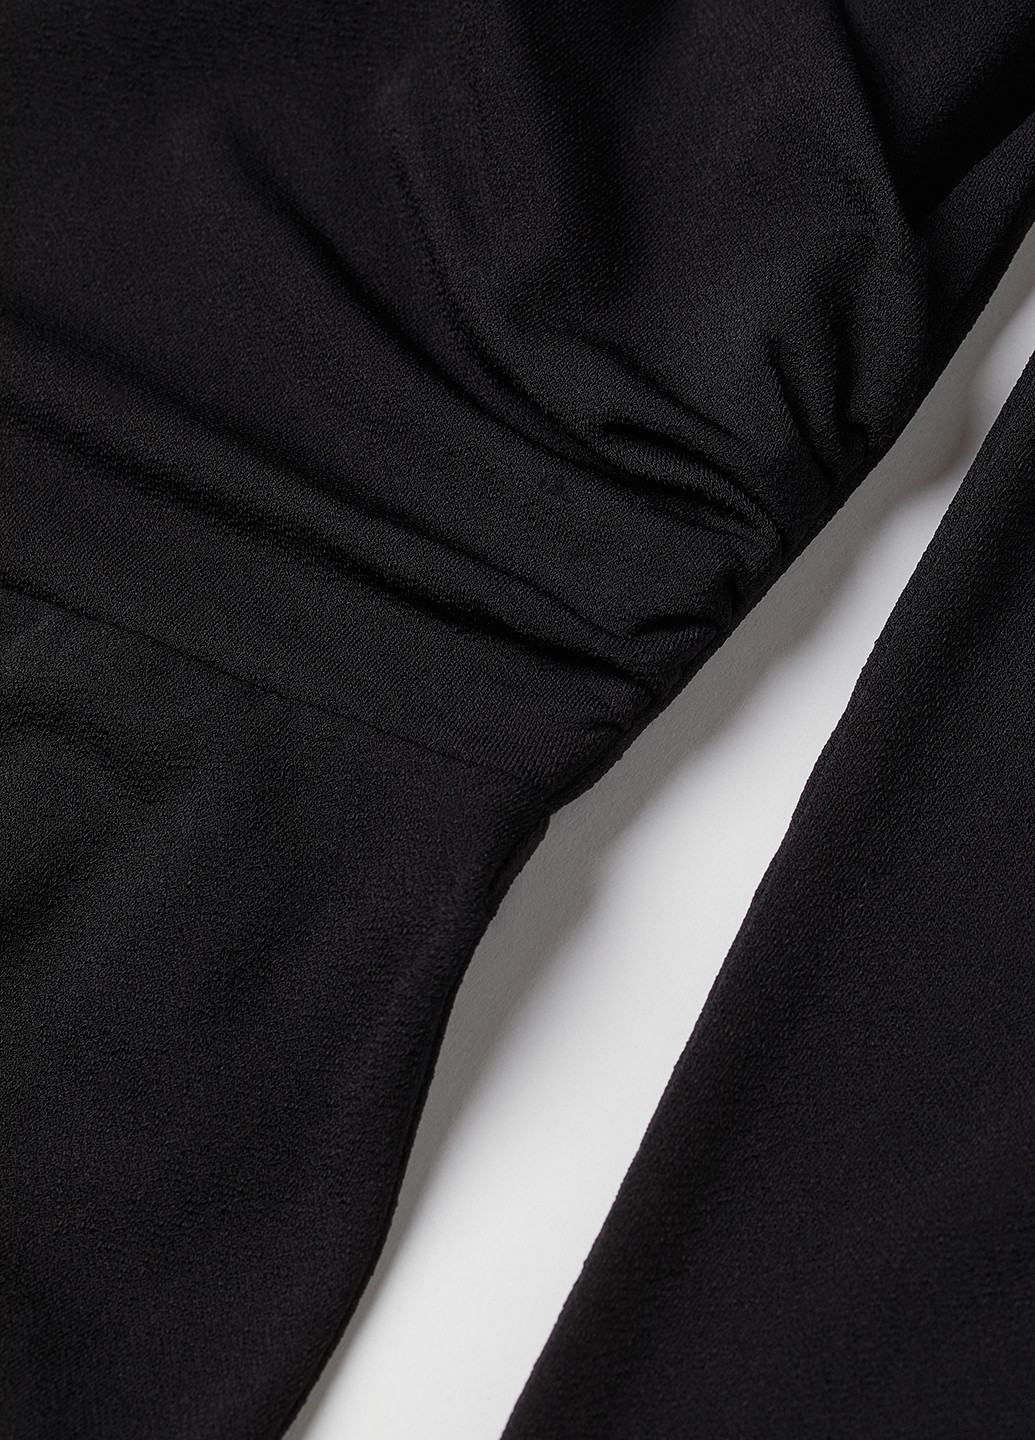 Комбинезон H&M комбинезон-брюки однотонный чёрный кэжуал полиэстер, трикотаж